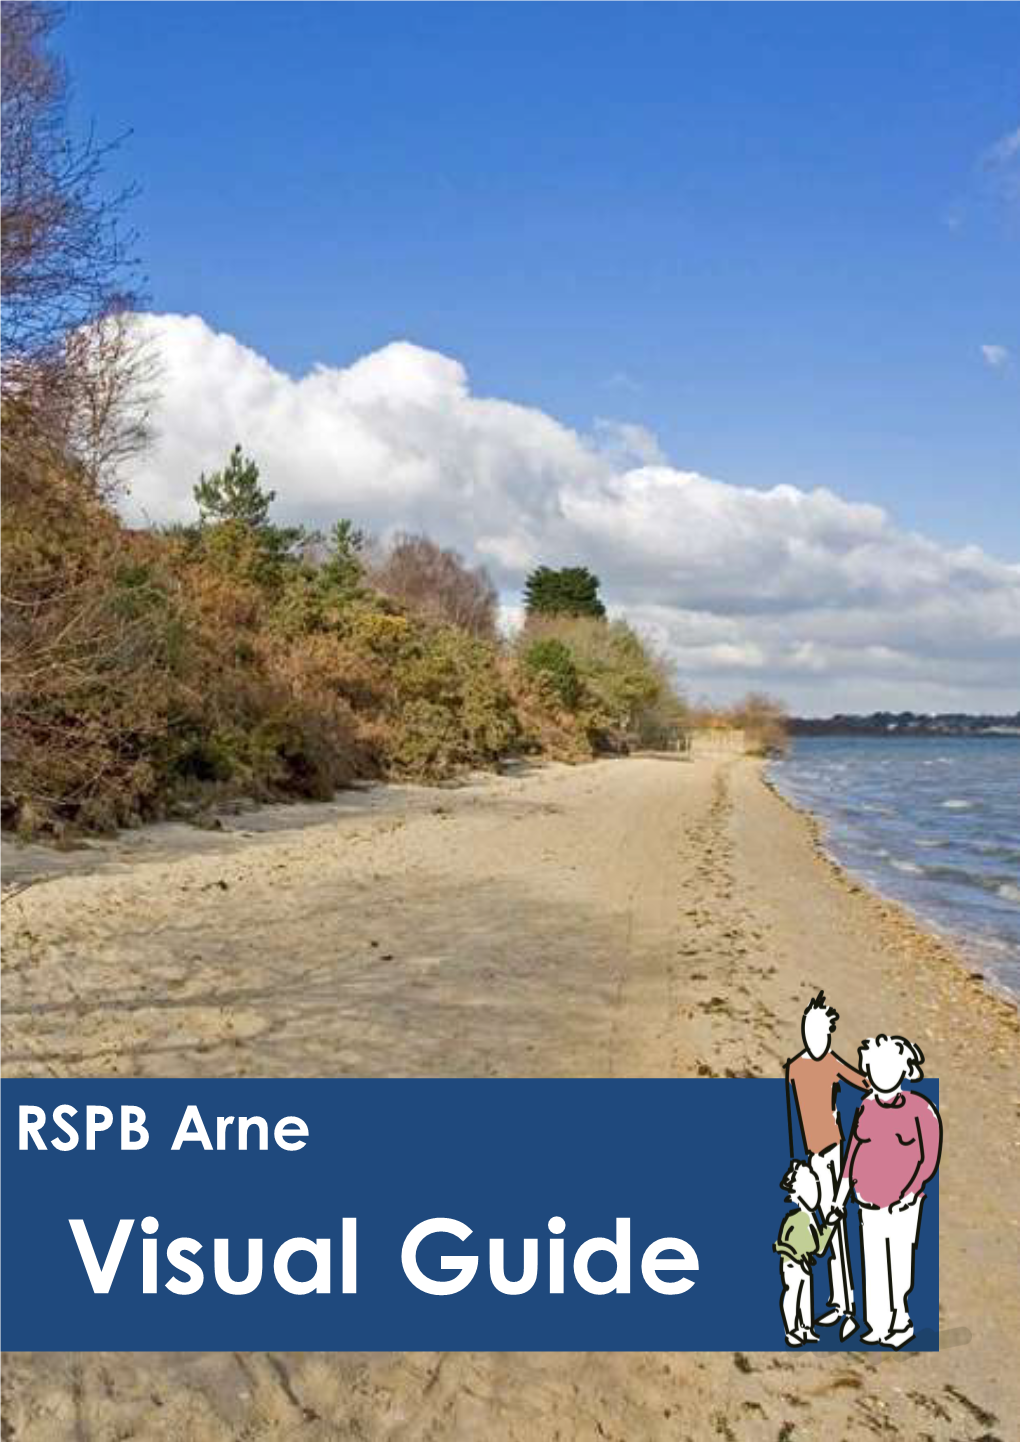 RSPB Arne Visual Guide